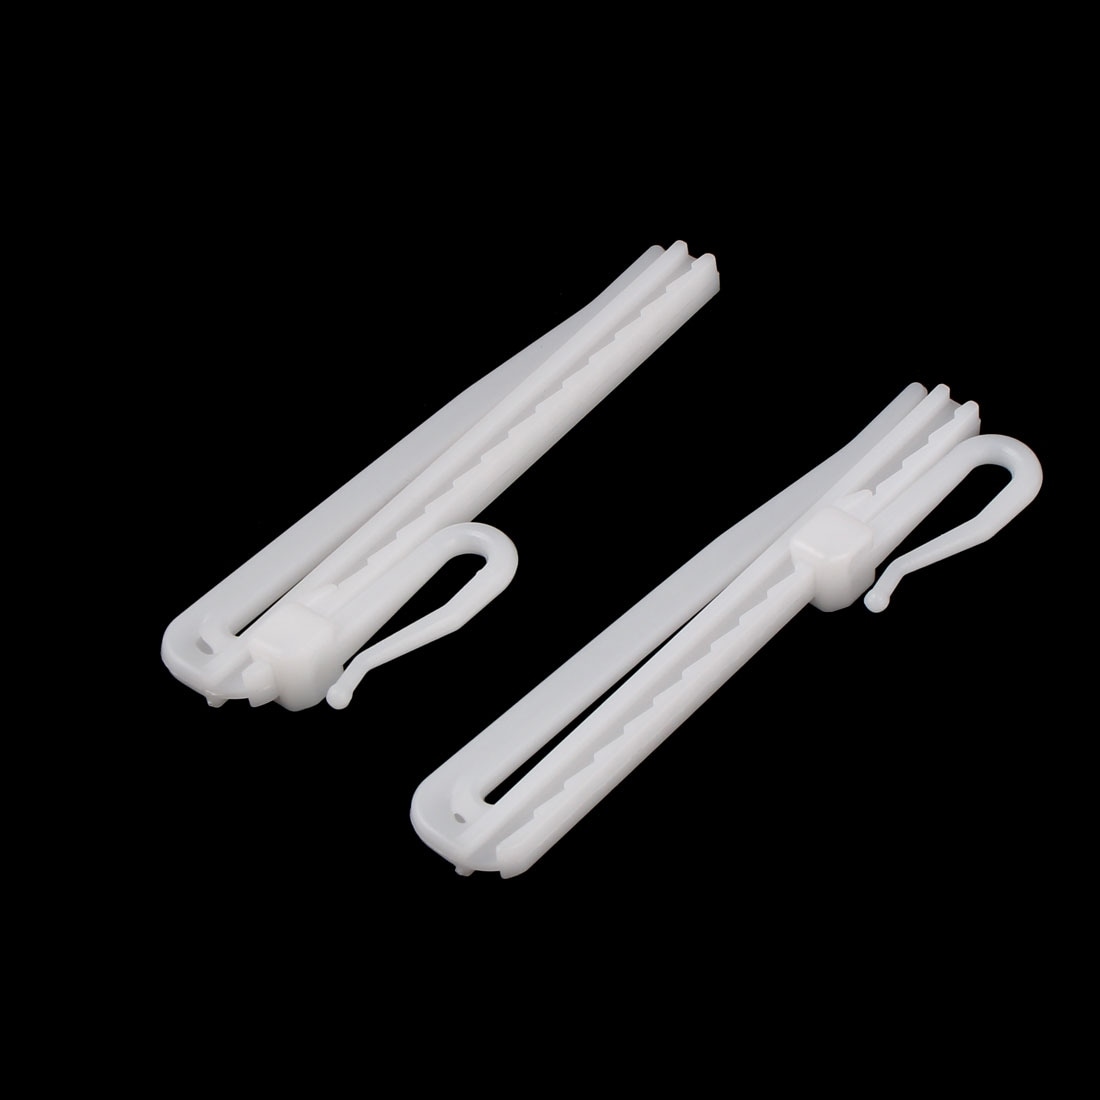 Adjustable Depth Pinch Pleat Locking Curtain Tape Clip Hooks 20pcs - White  - 3.3 x 1 x 0.4(L*W*T) - Bed Bath & Beyond - 33903350